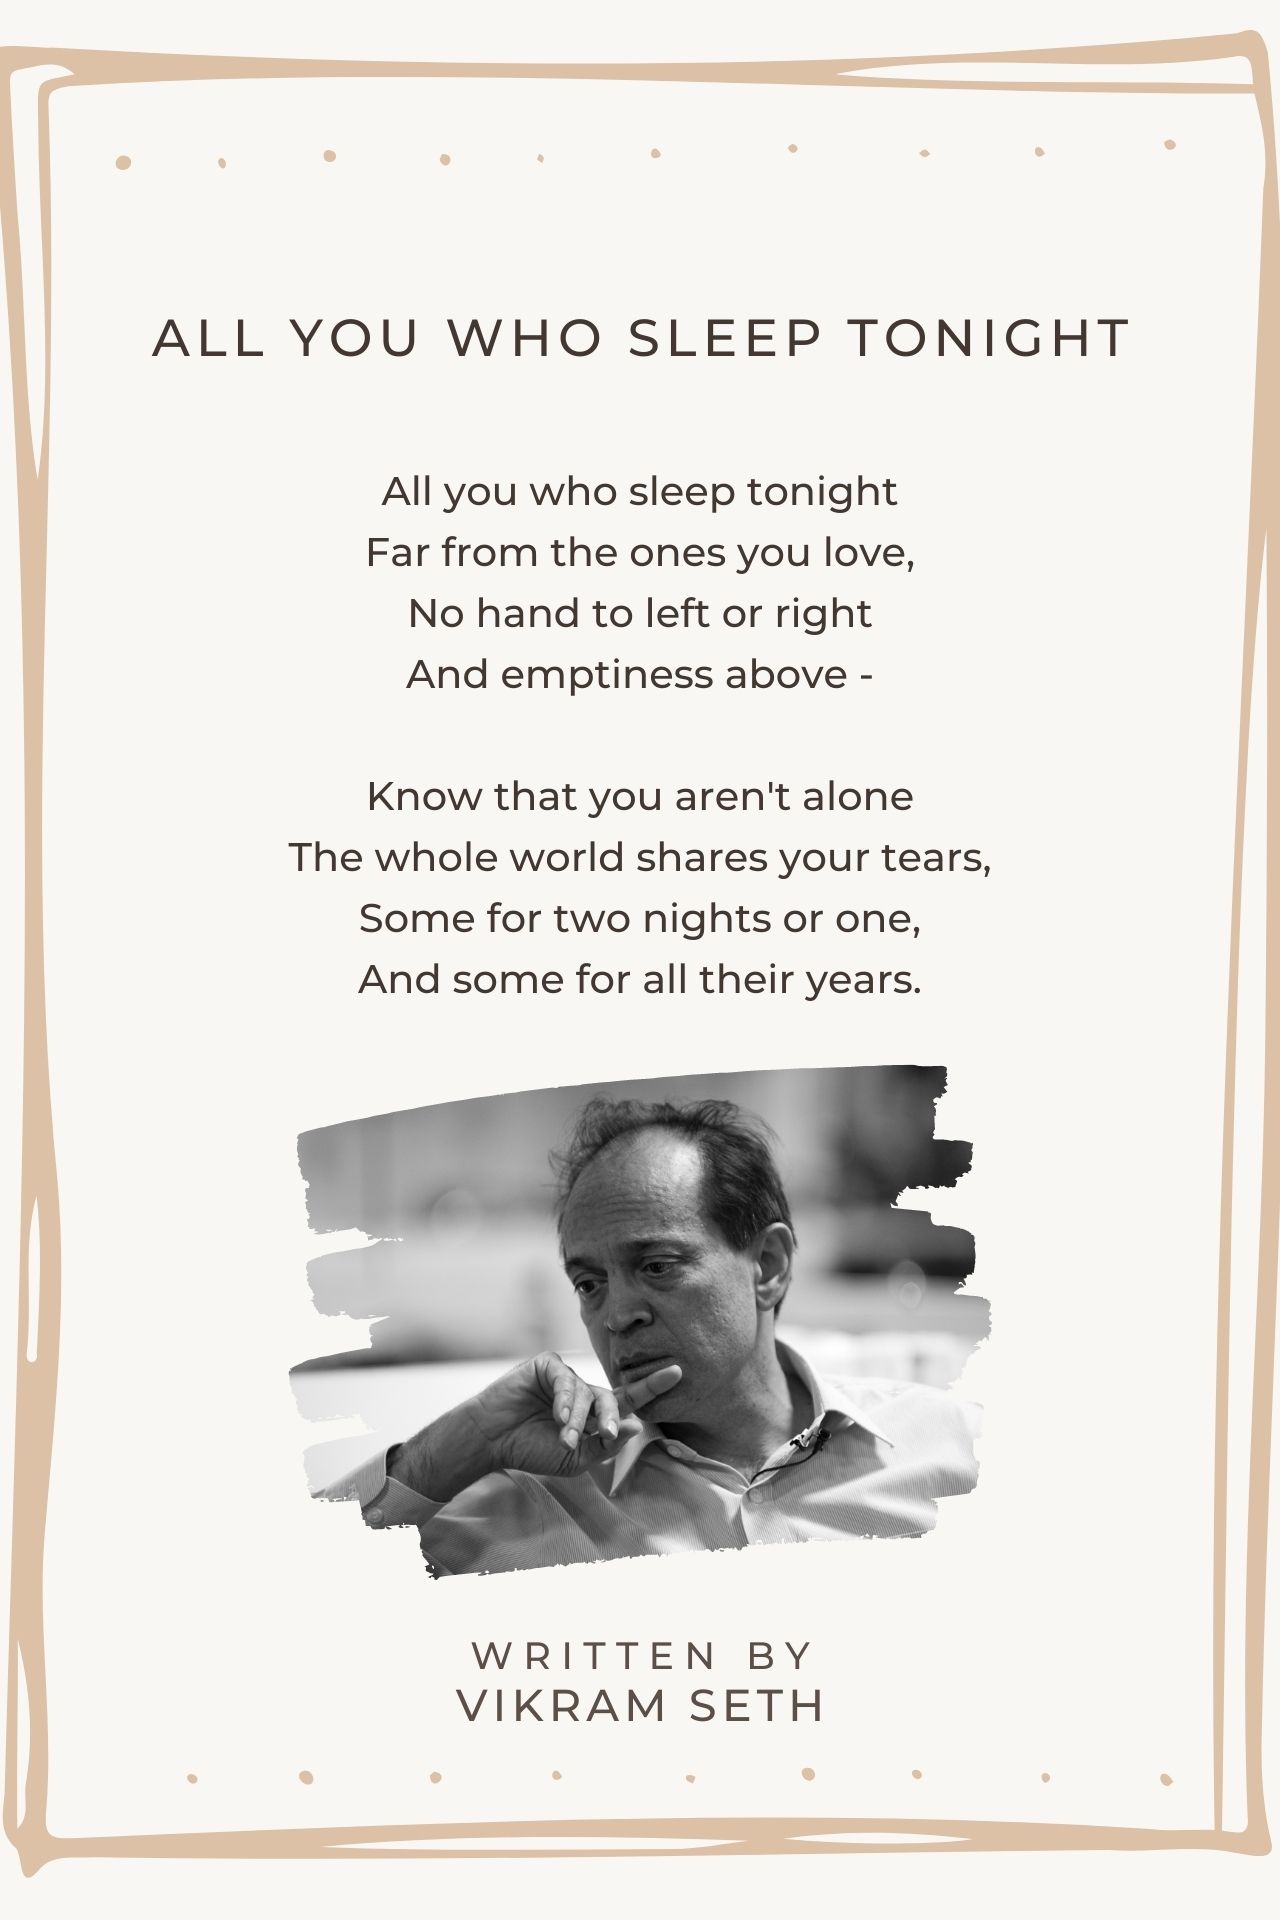 All You Who Sleep Tonight - All You Who Sleep Tonight Poem by